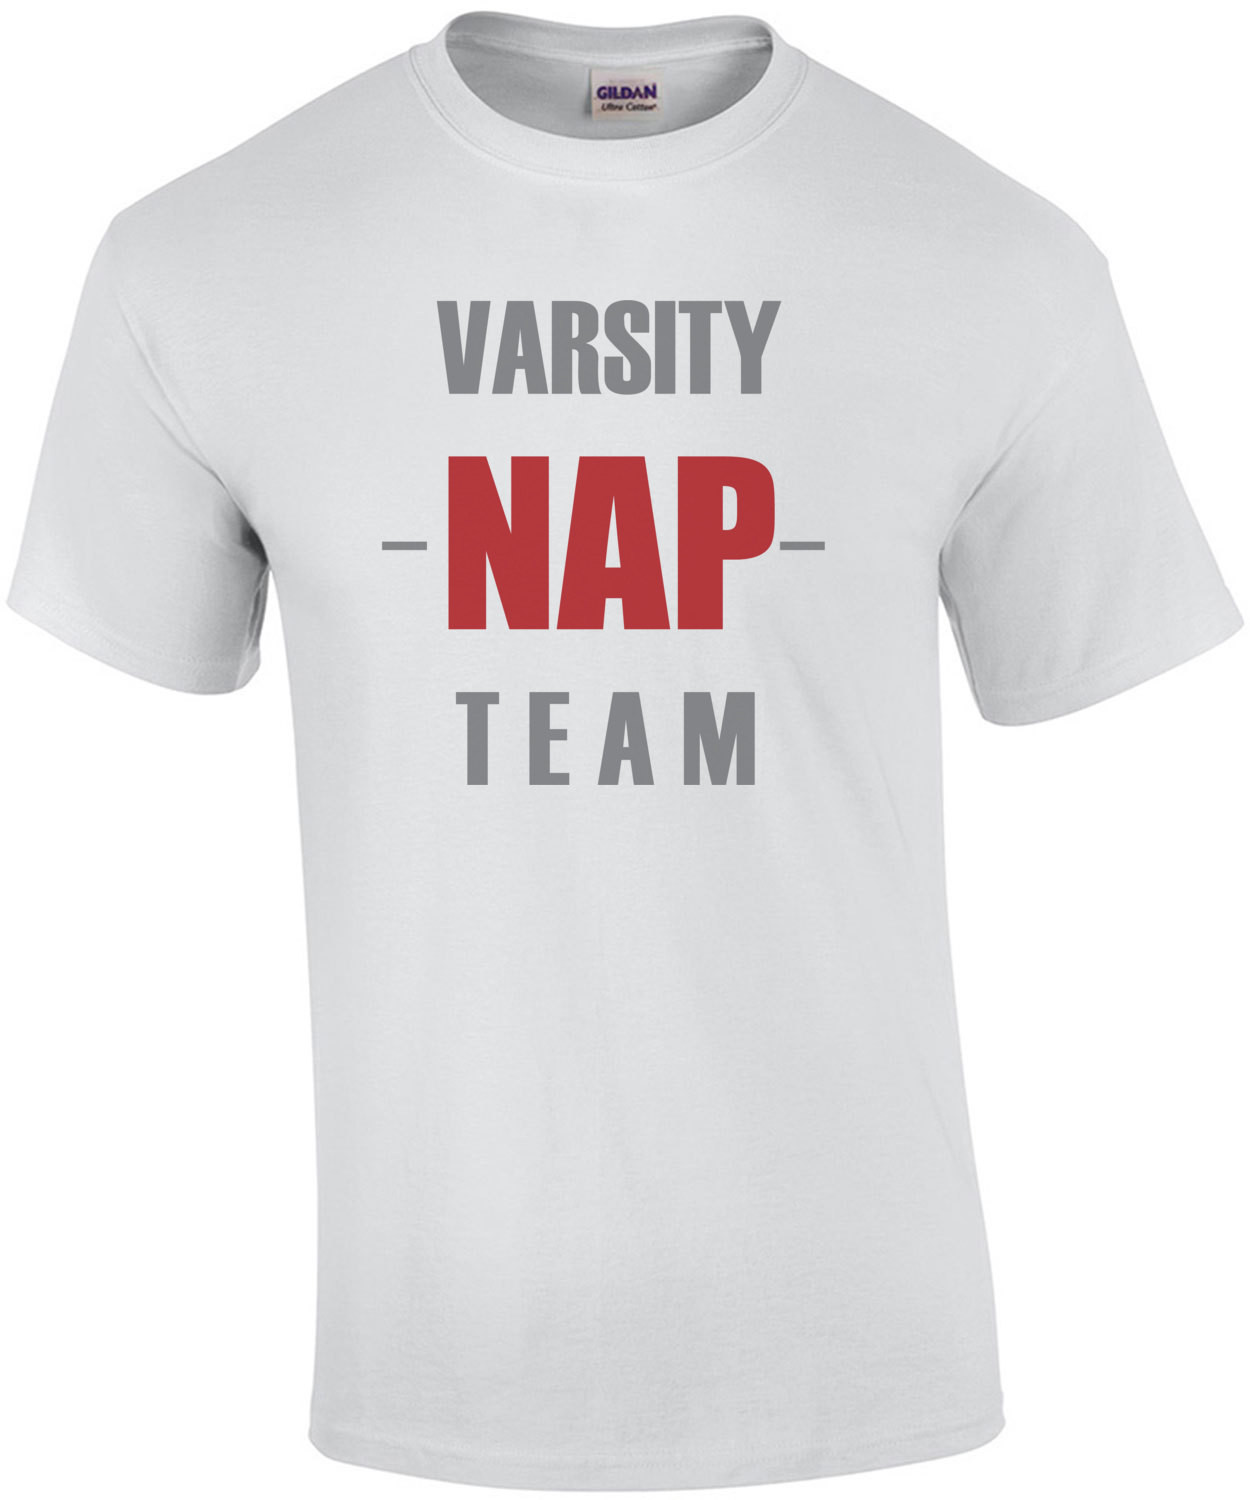 Varsity NAP Team - funny sleep